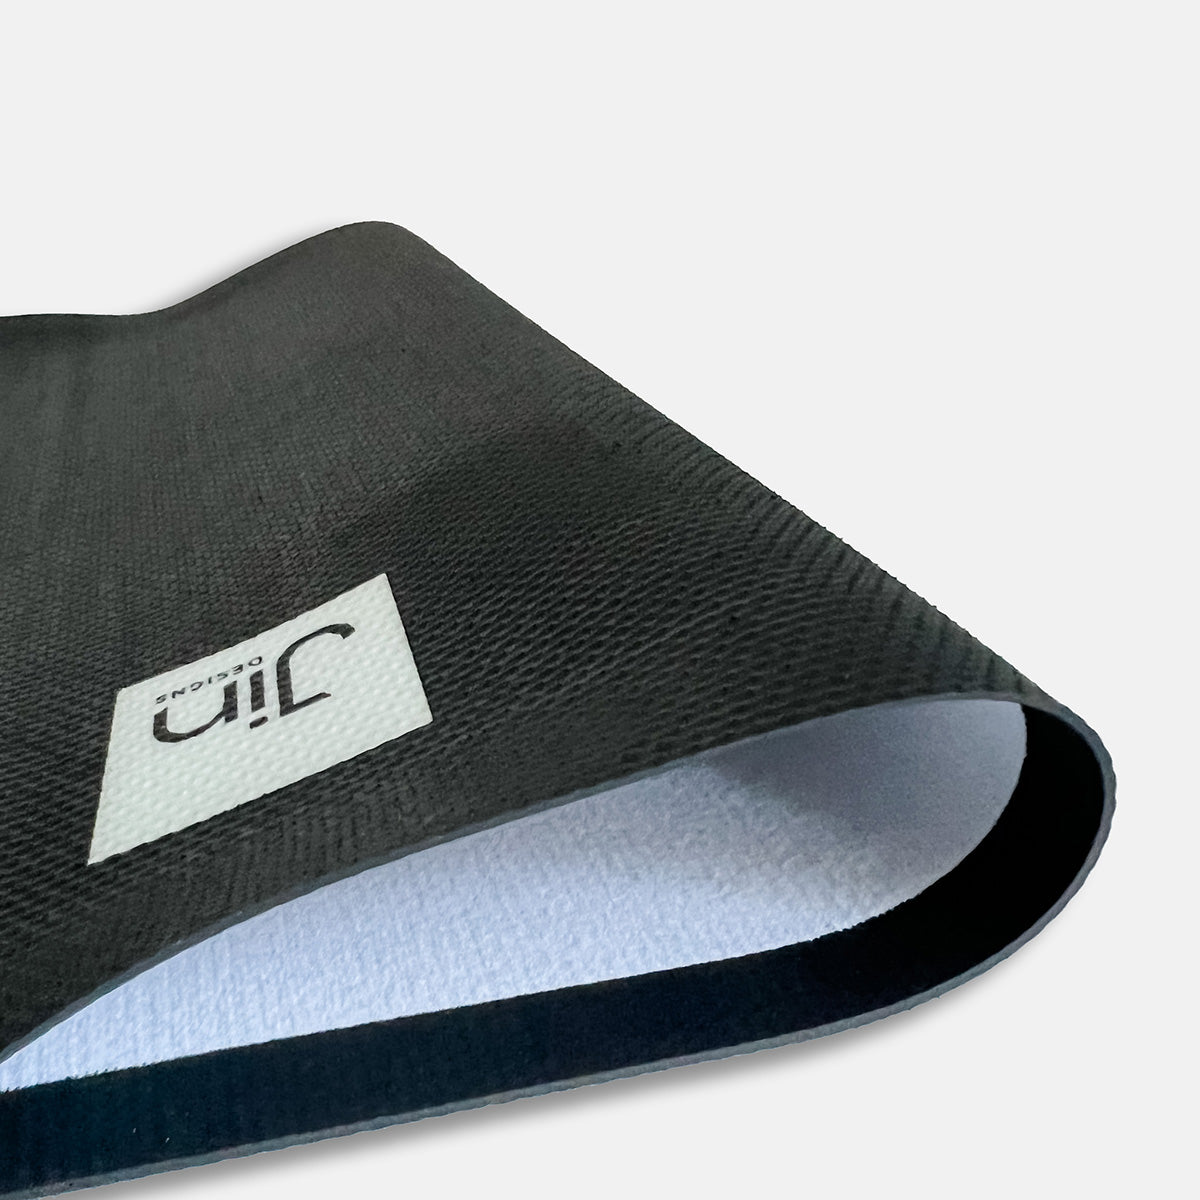 Anti-slip rubber backing on desk mat and Jin Designs logo